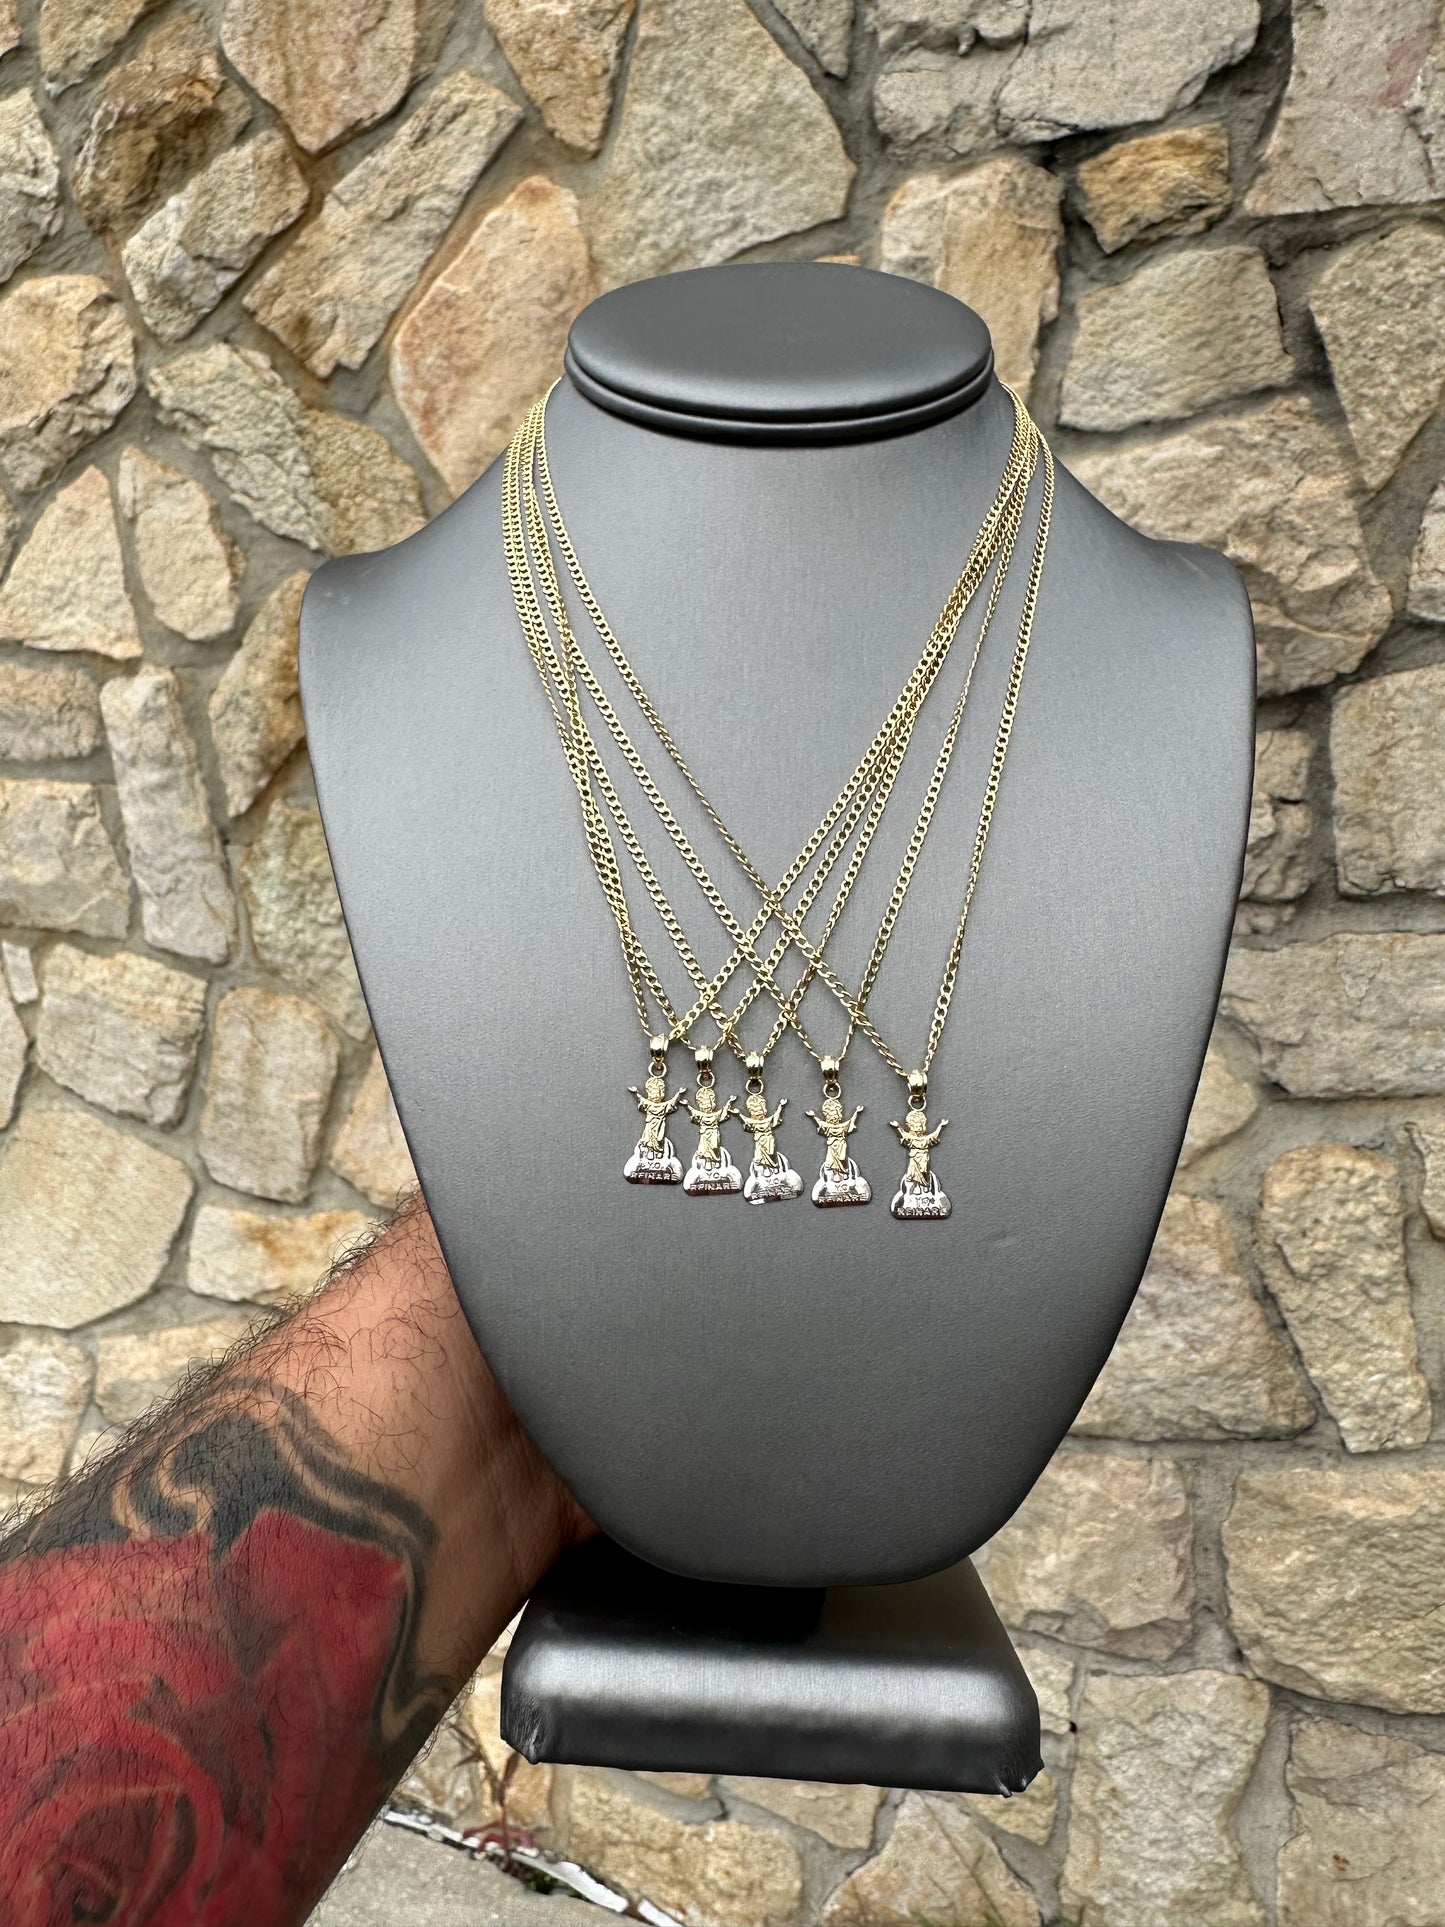 14k Divino niño pendant with cuban chain